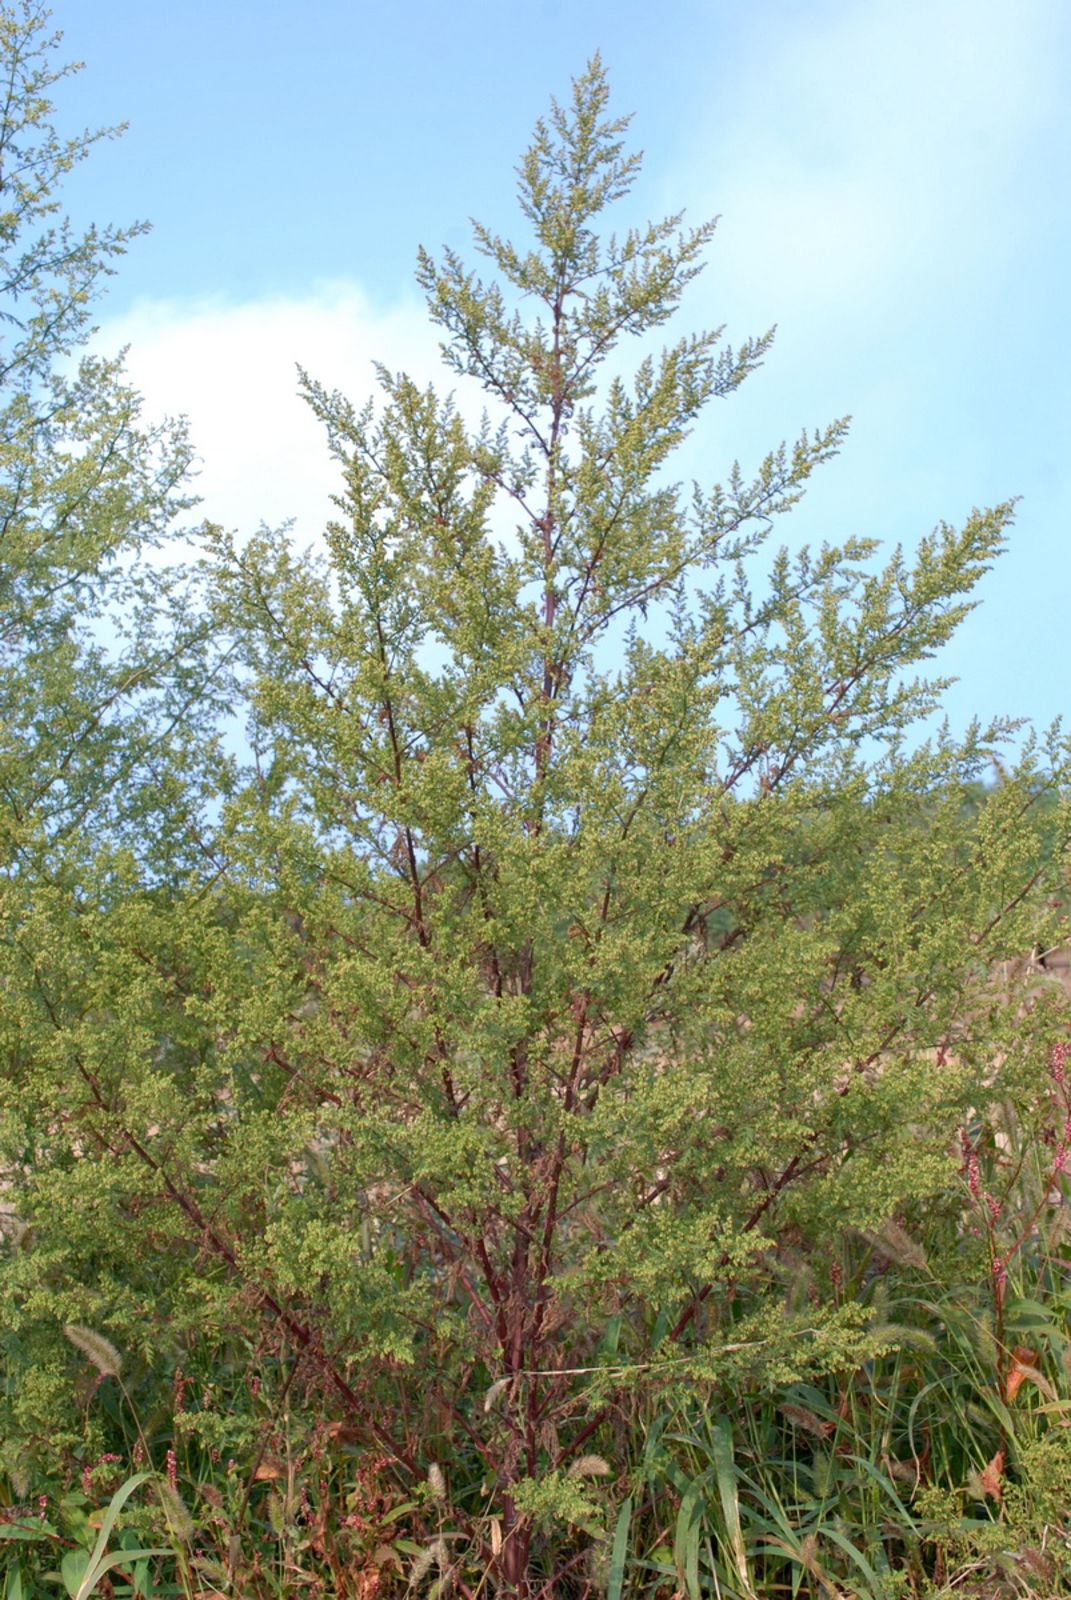 Observation: Artemisia annua L. (marlonschenker00 Sep 27, 2022) Useful  plants - Pl@ntNet identify